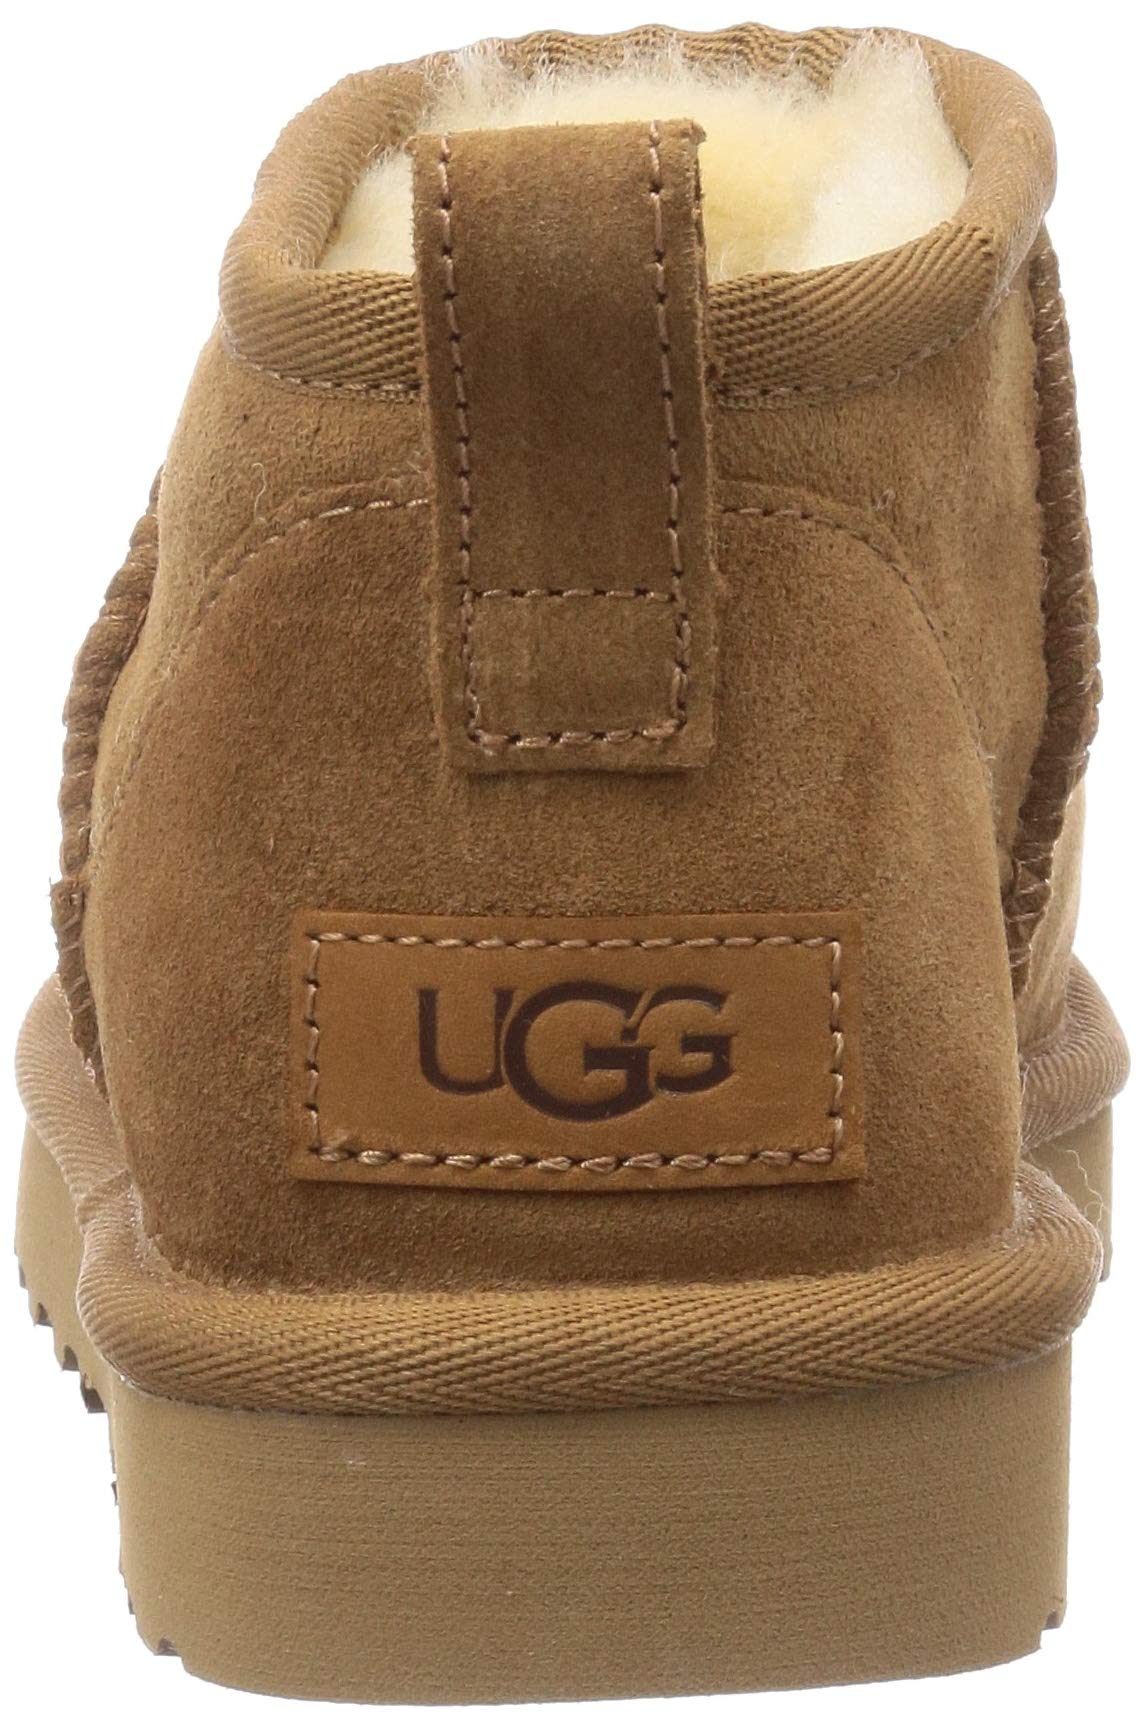 UGG Women's Classic Ultra Mini Fashion Boot